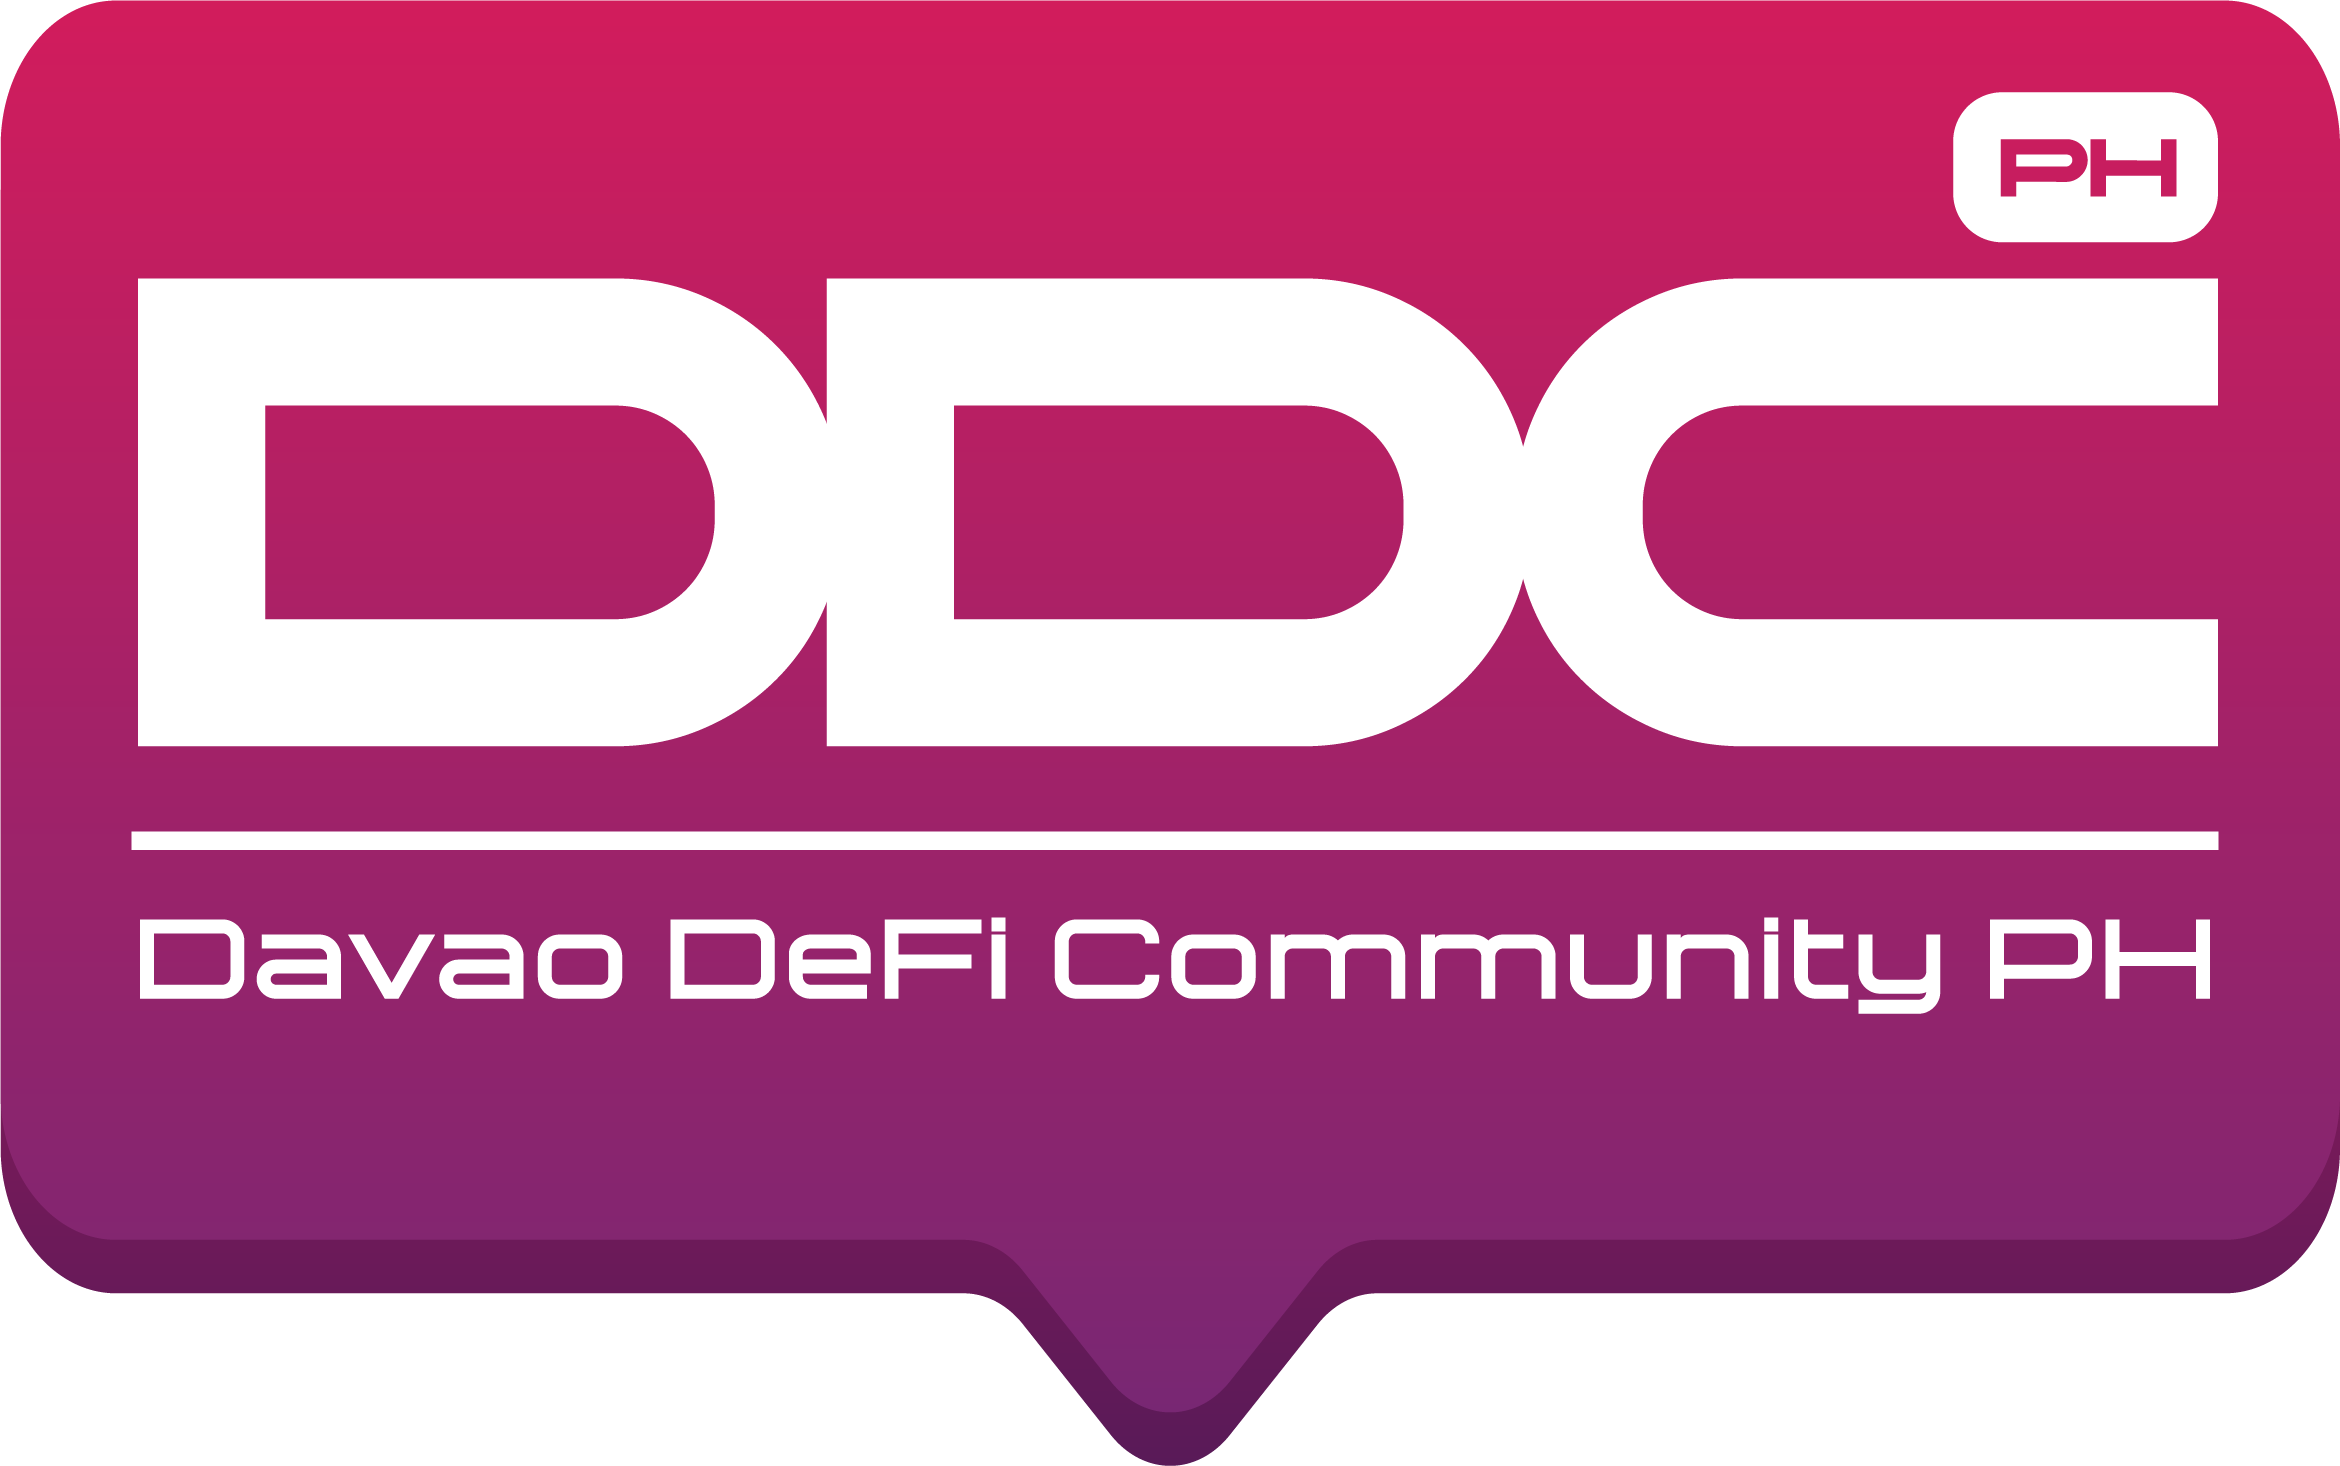 Davao DeFi Community